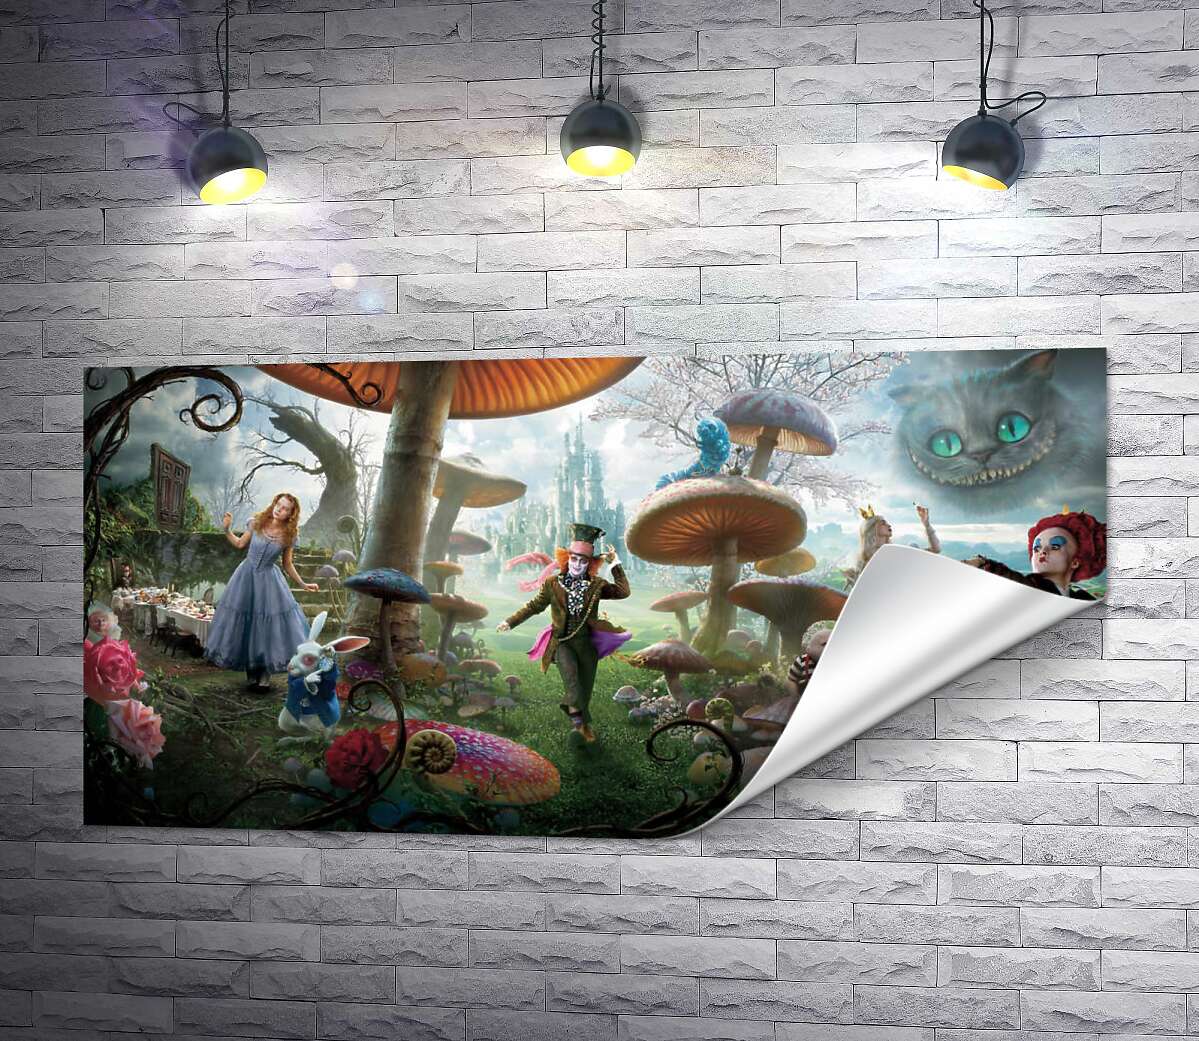 друк Чудернацький постер до фільму "Аліса в країні див" (Alice in Wonderland)